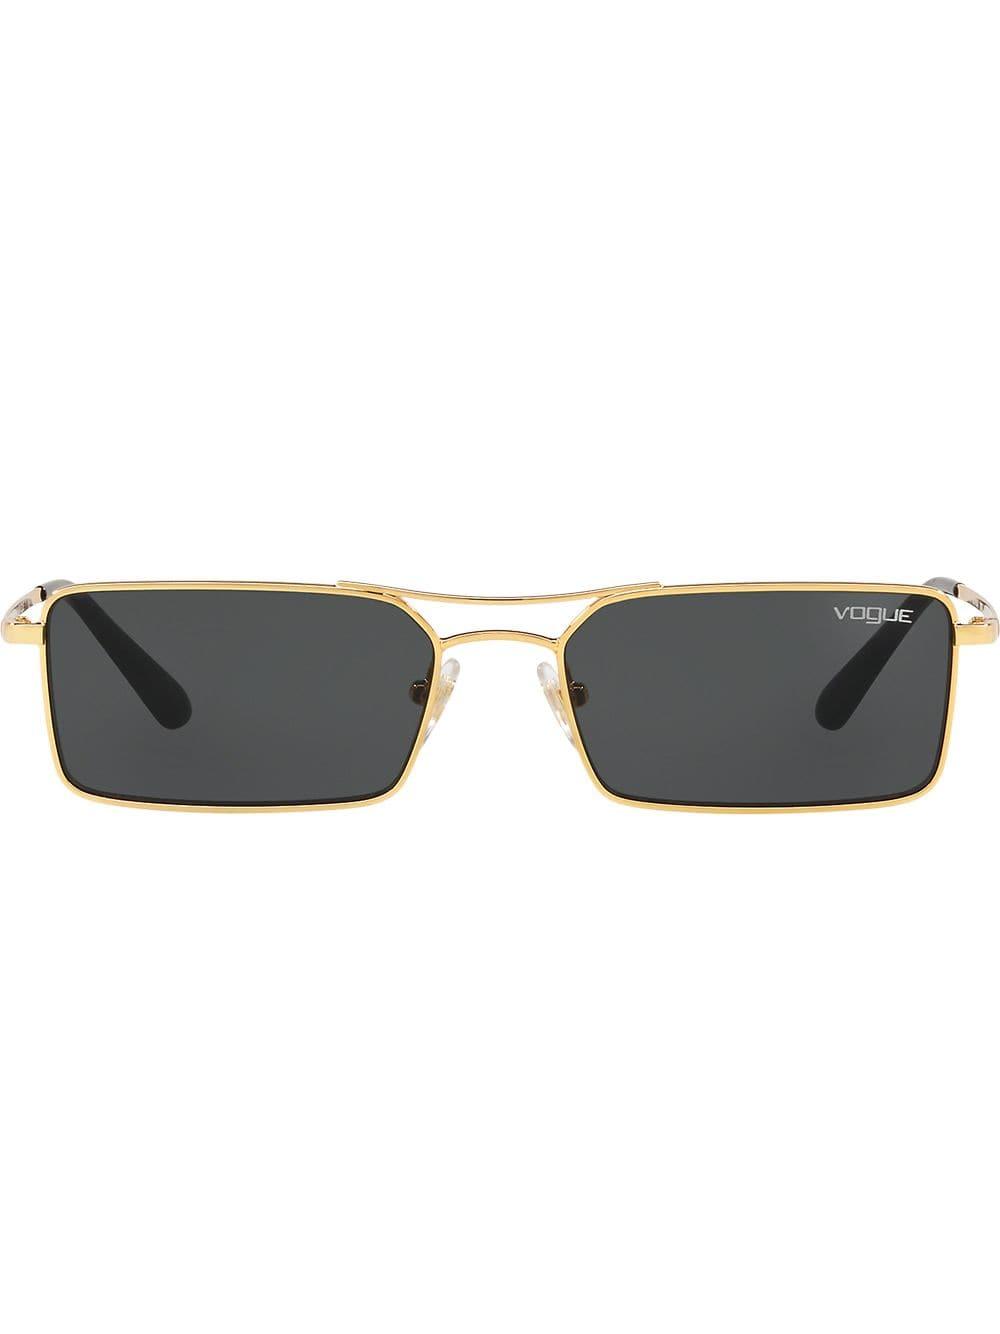 Vogue Eyewear Gigi Hadid Capsule Square Shaped Sunglasses in Gold  (Metallic) - Lyst